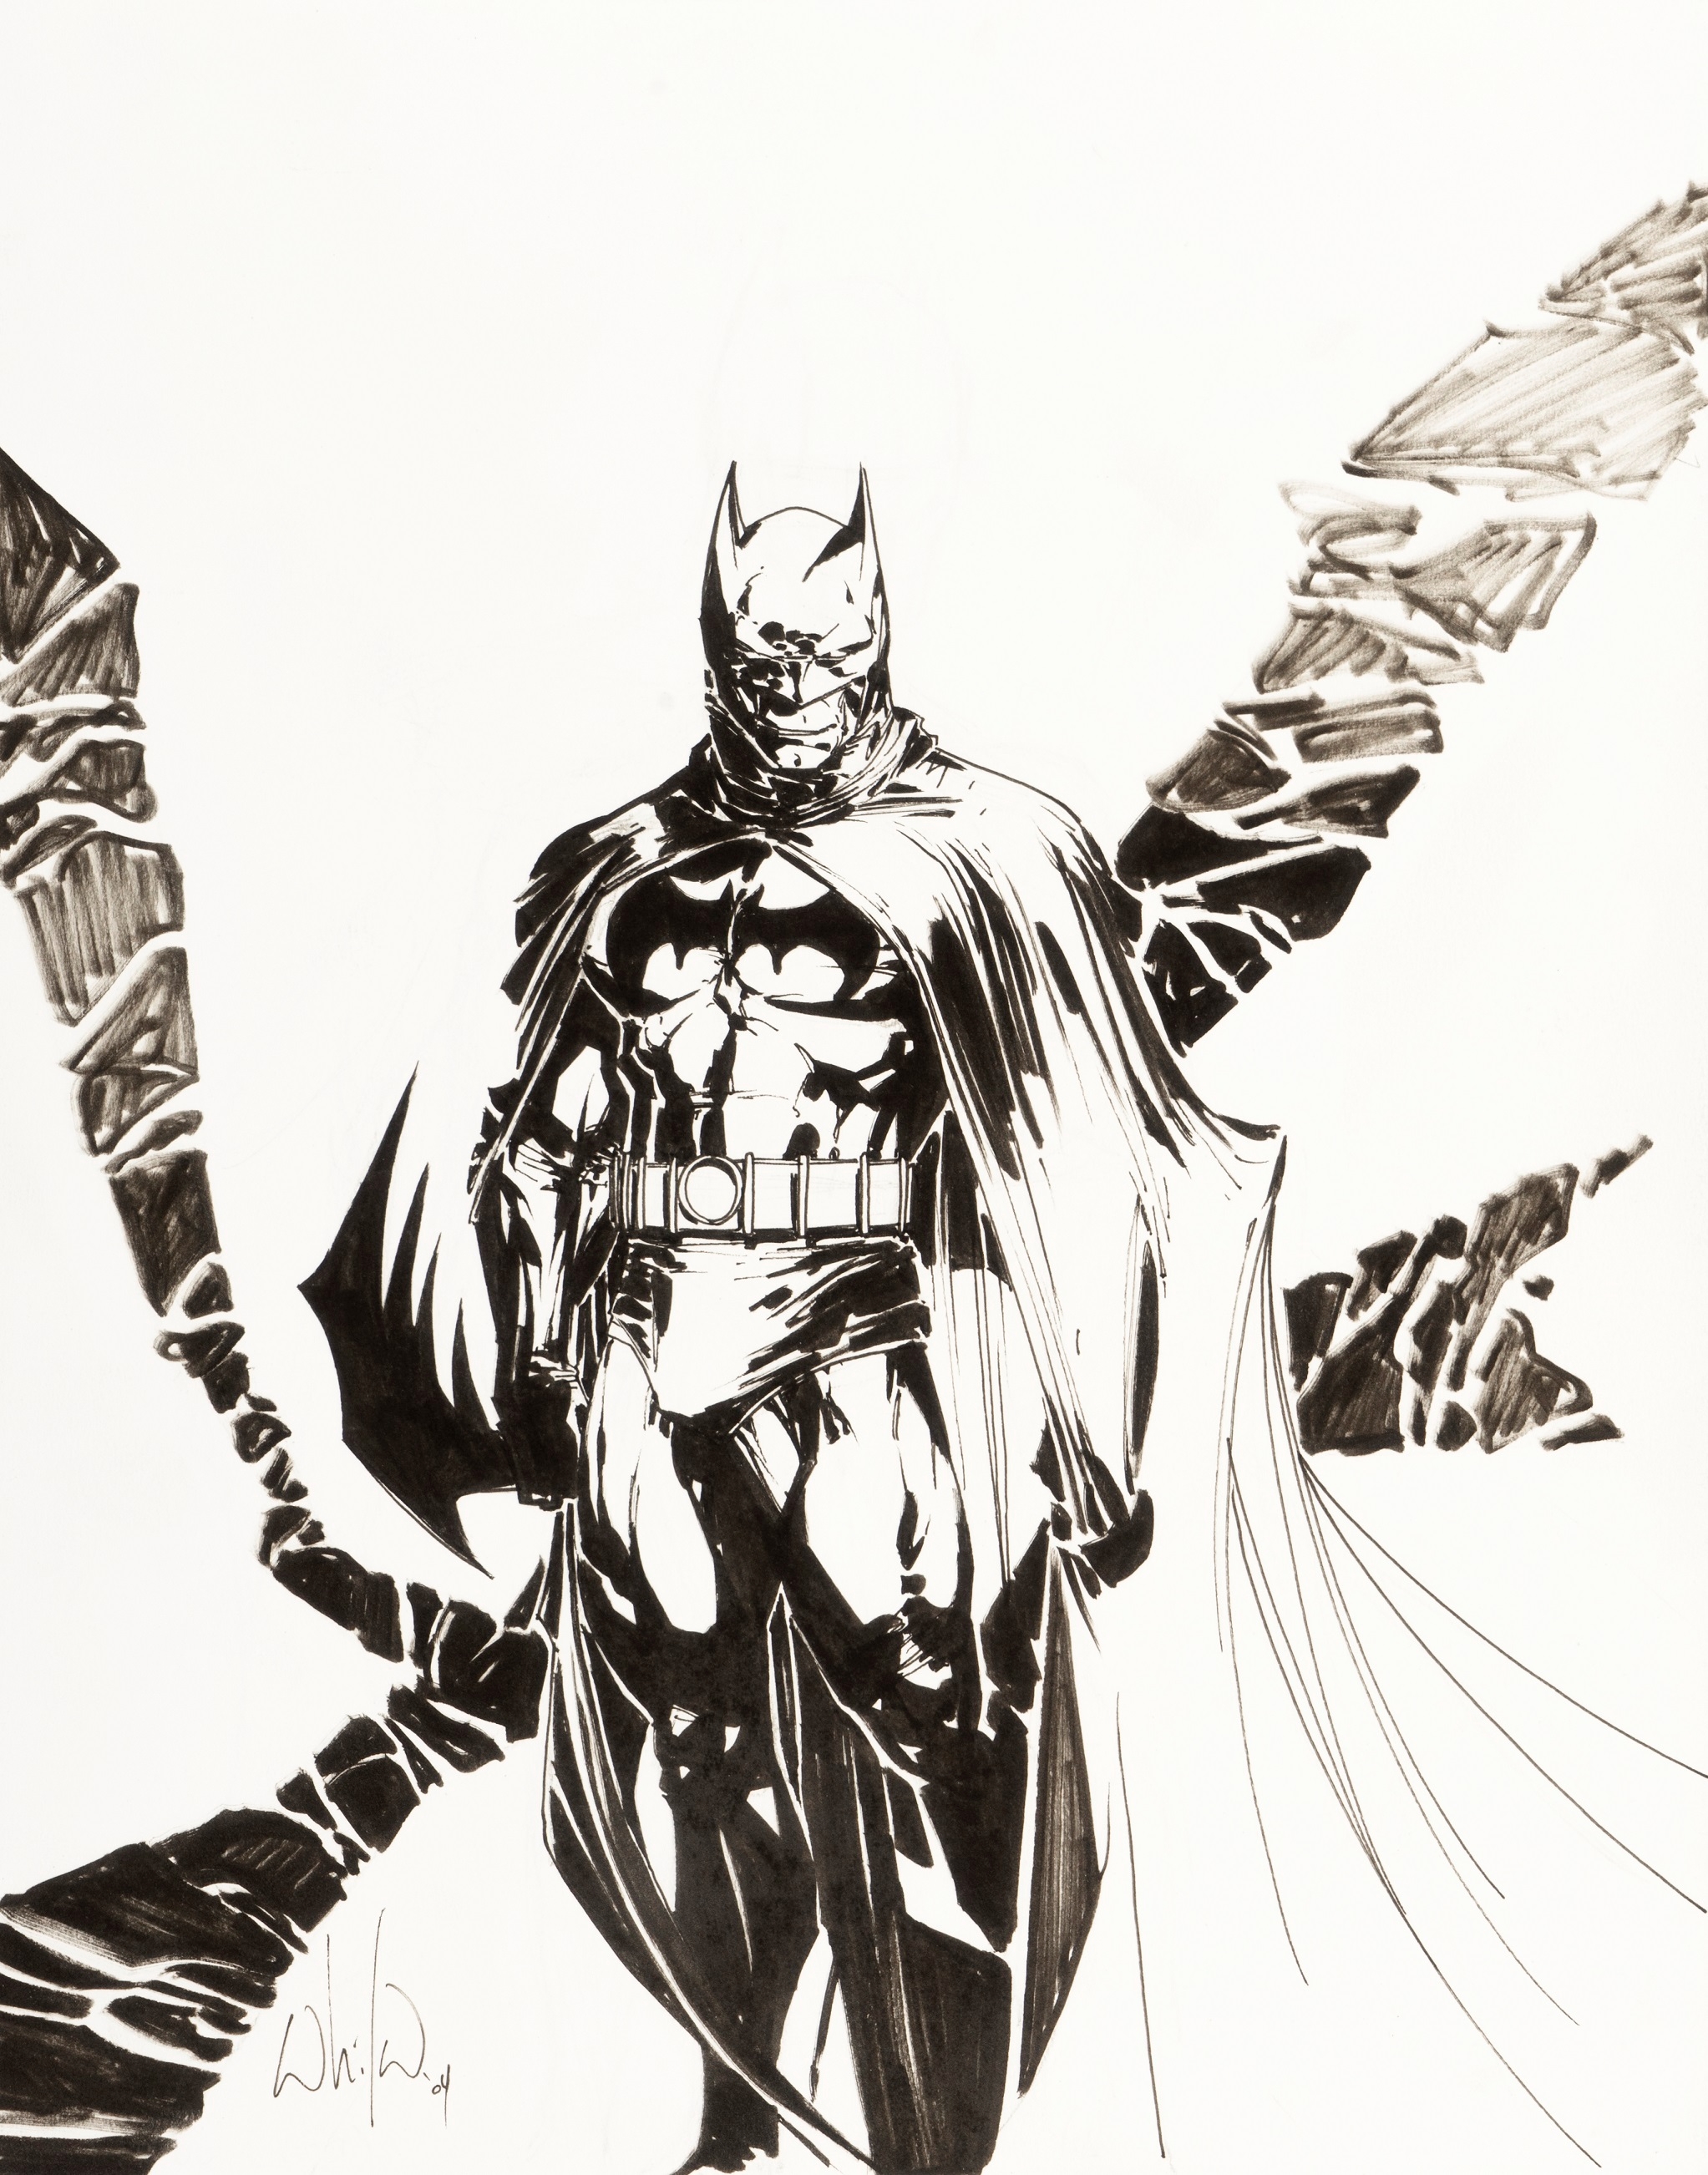 William Portacio | “Batman” (2009) | MutualArt